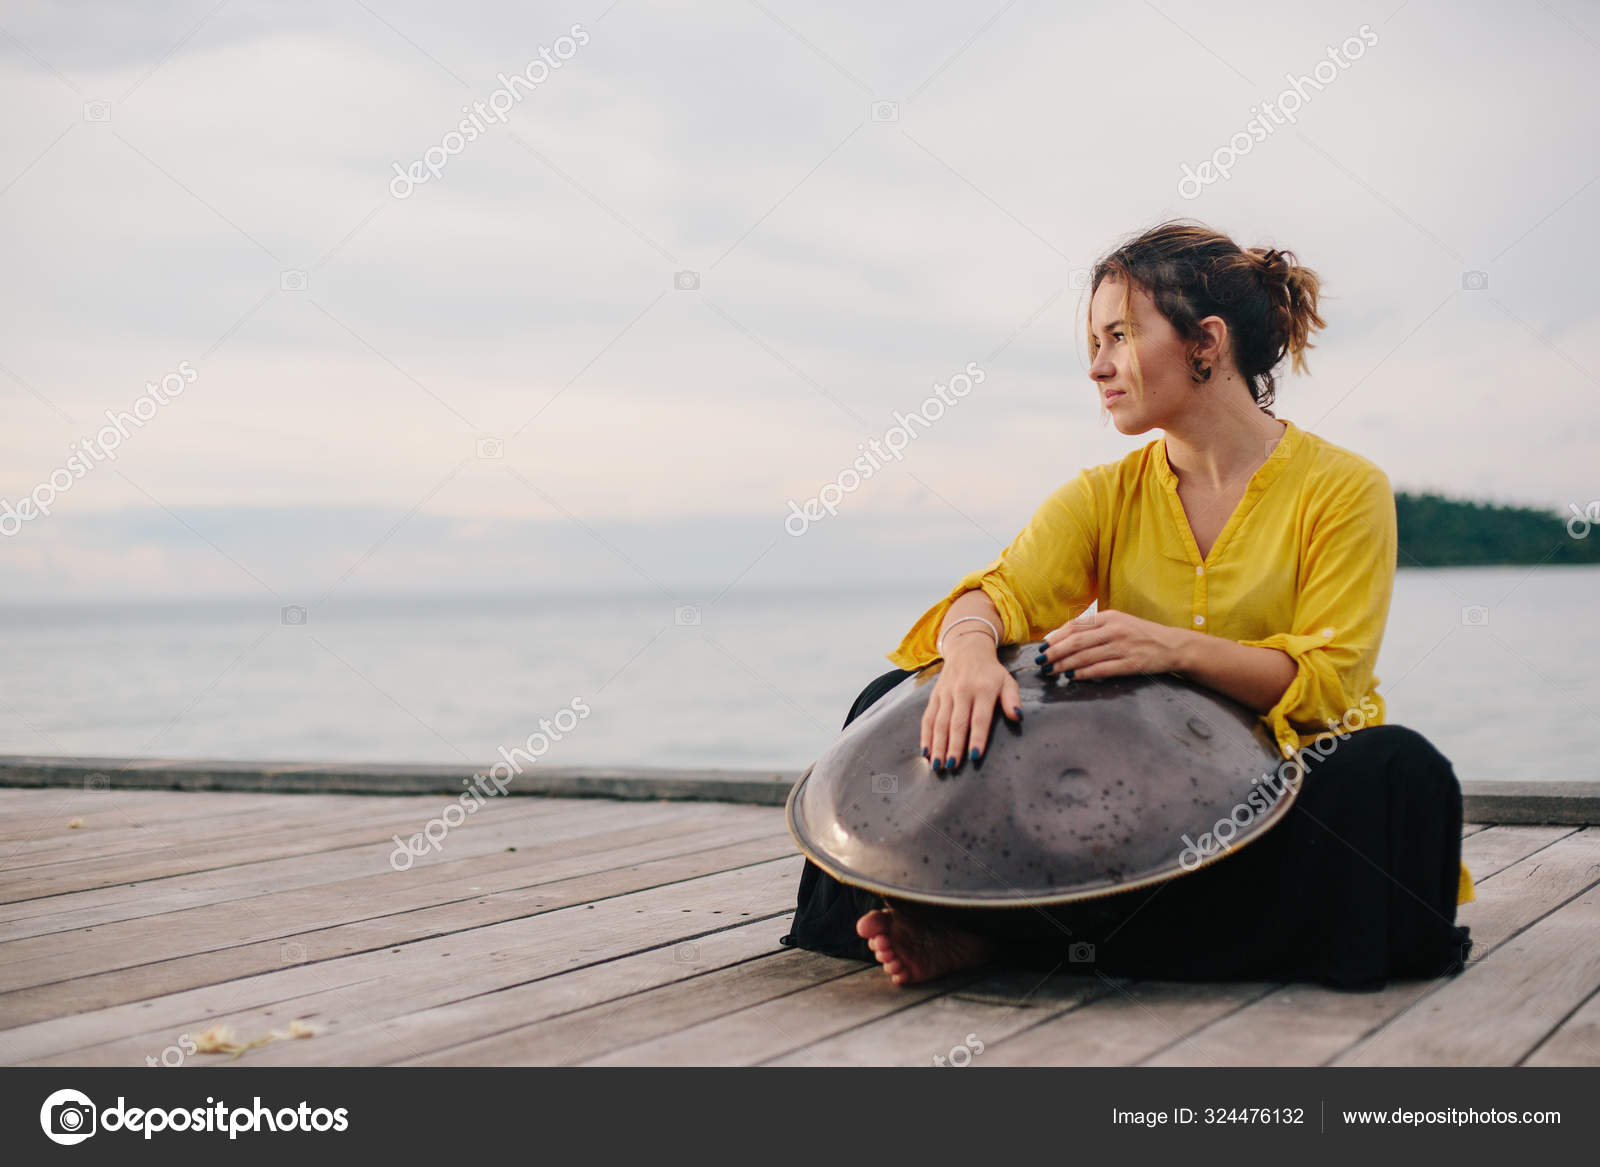 gelijktijdig Nauwgezet Tahiti Woman Playing Hang Drum Outdoor Sea Shore Stock Photo by ©AnnaTamila  324476132